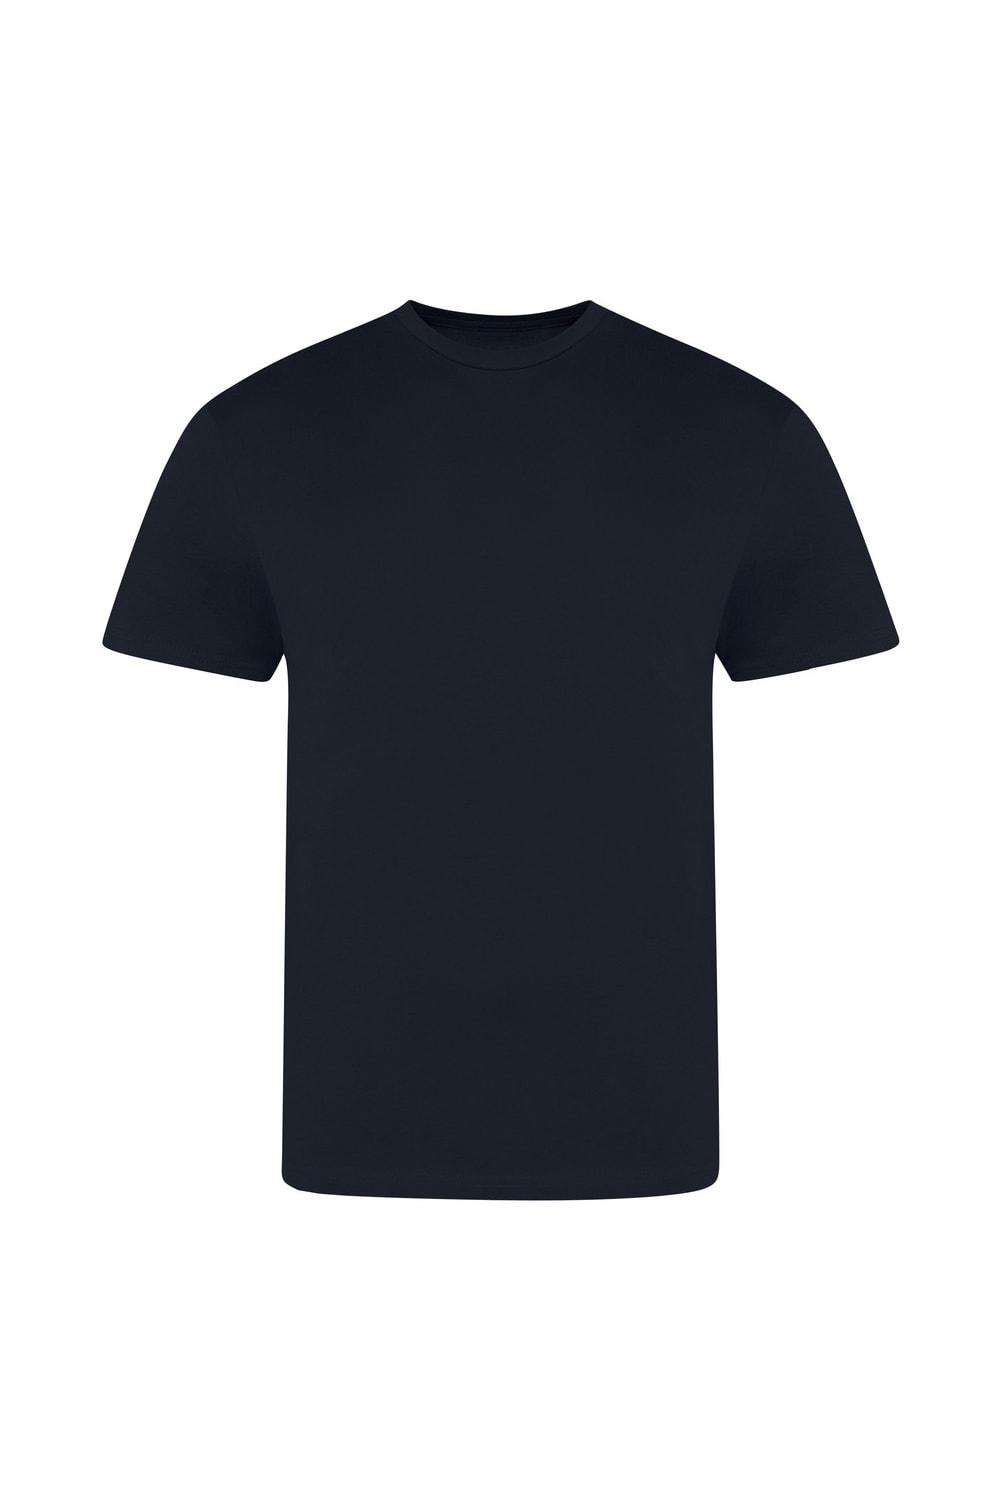 AWDis Just Ts Mens The 100 T-Shirt (Oxford Navy)